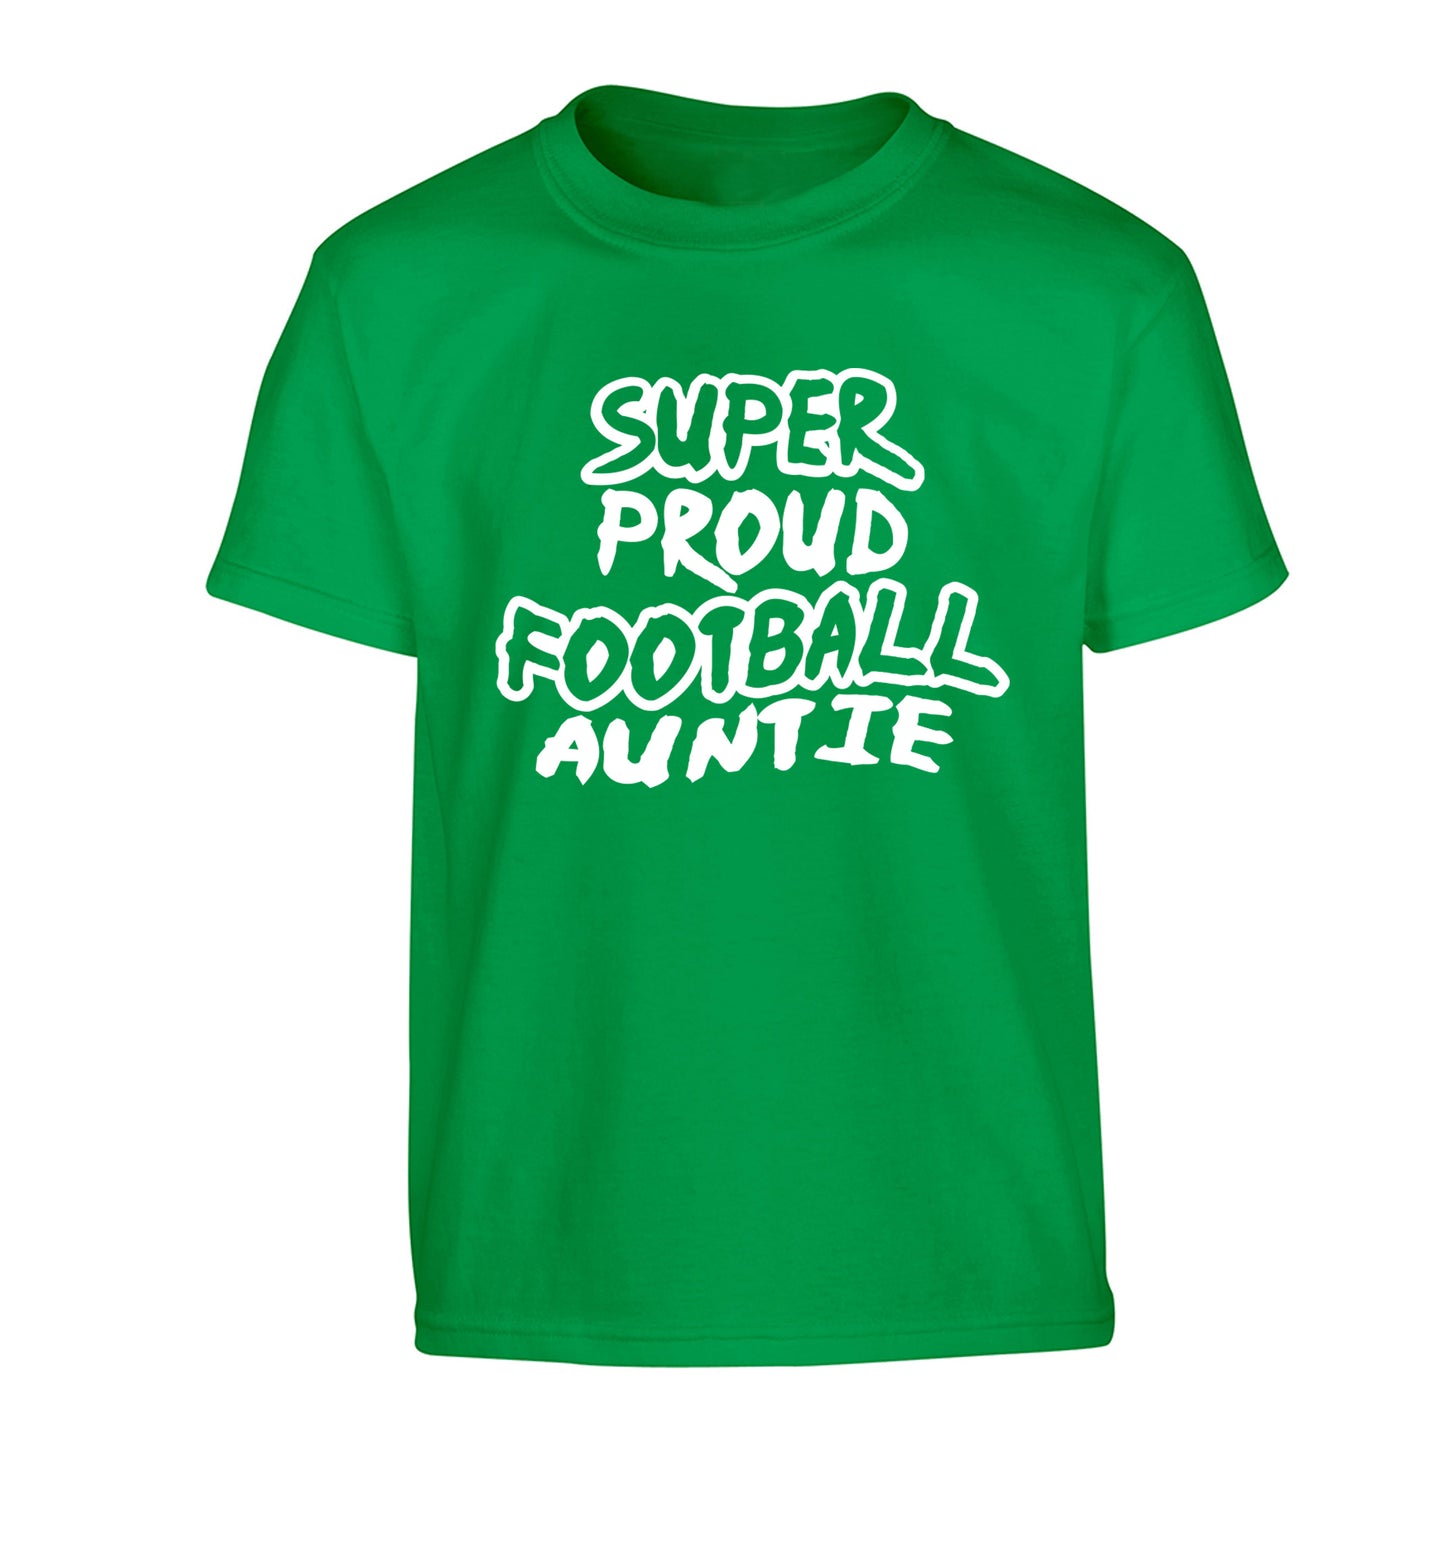 Super proud football auntie Children's green Tshirt 12-14 Years